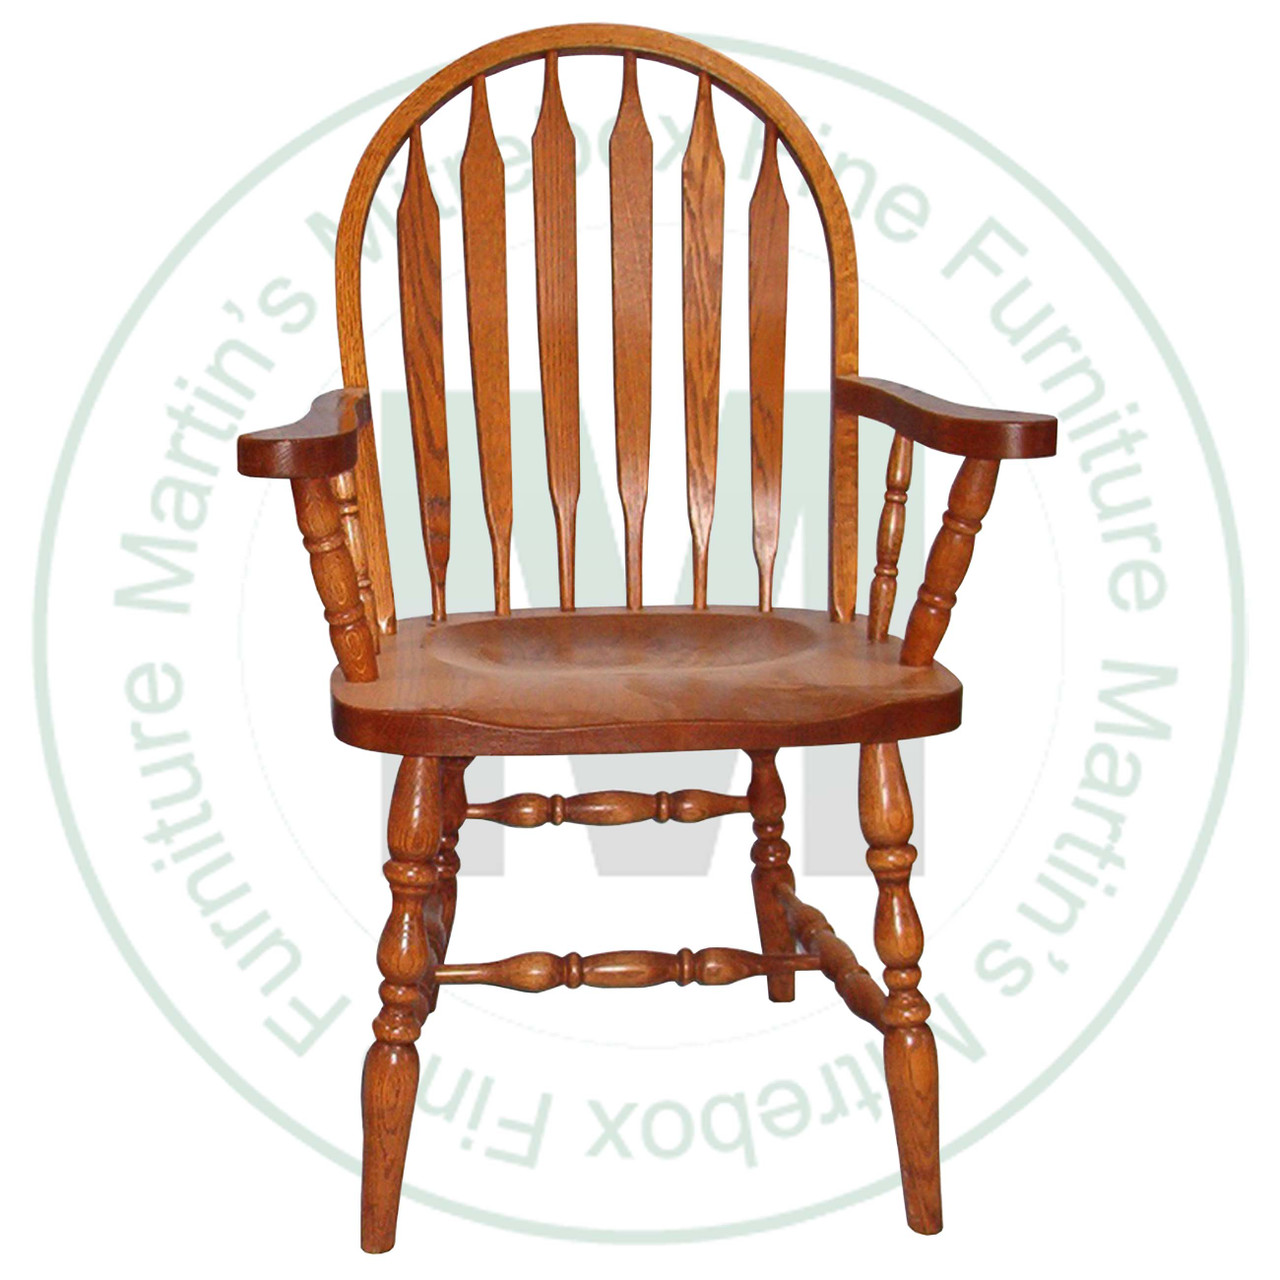 Oak Cambridge Arm Chair Has Wood Seat